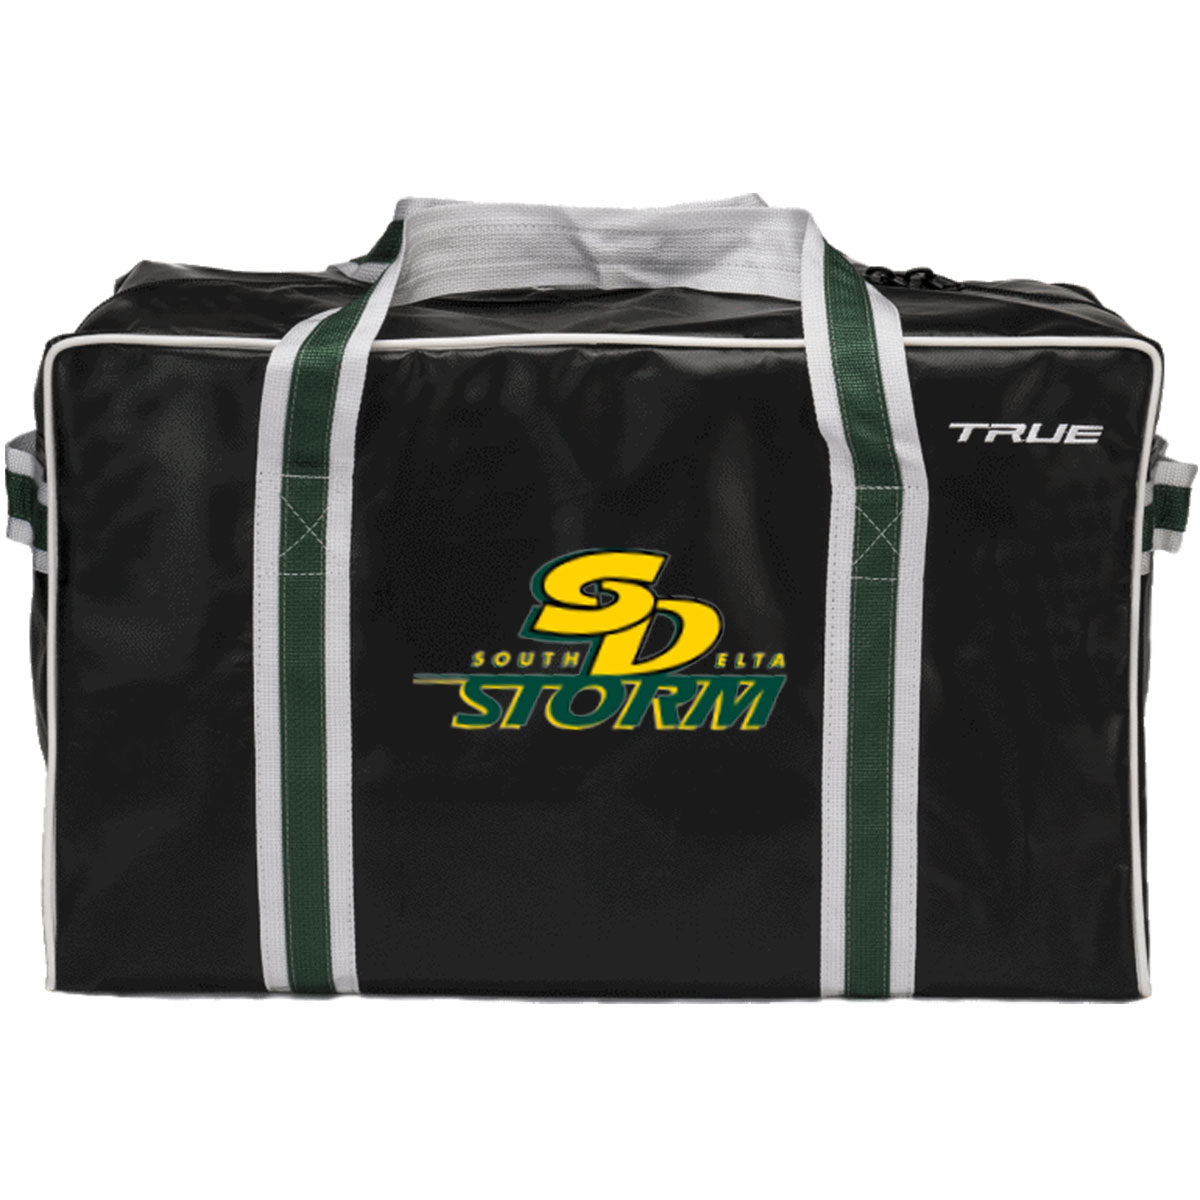 South Delta Storm -- TRUE Custom Intermediate Bag